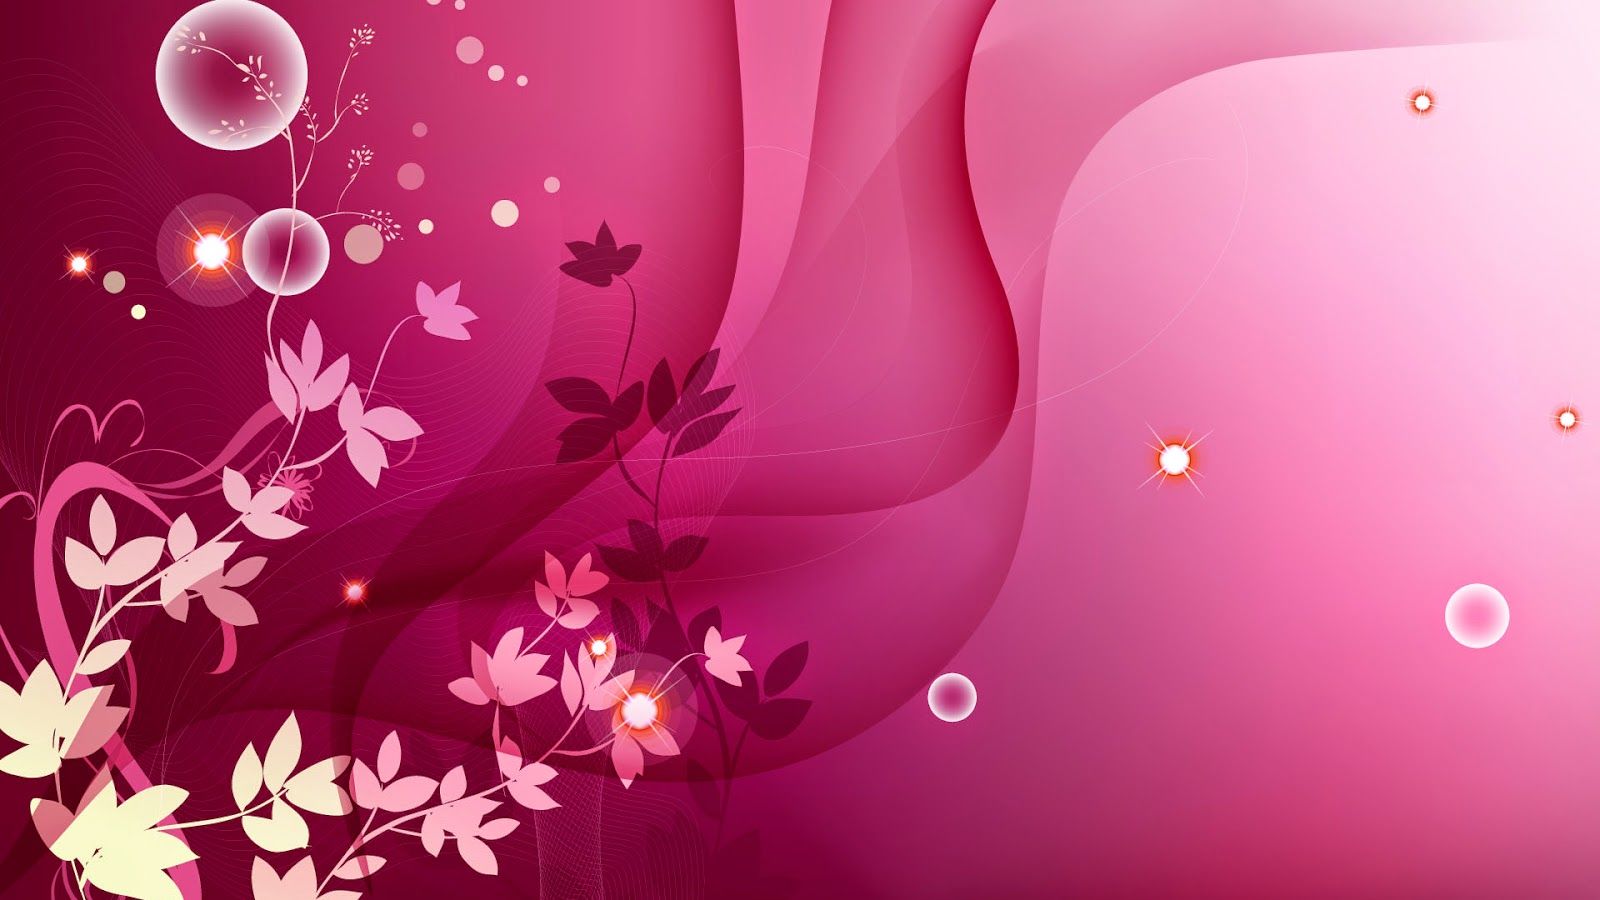 Pink Girly Wallpaper for Desktop